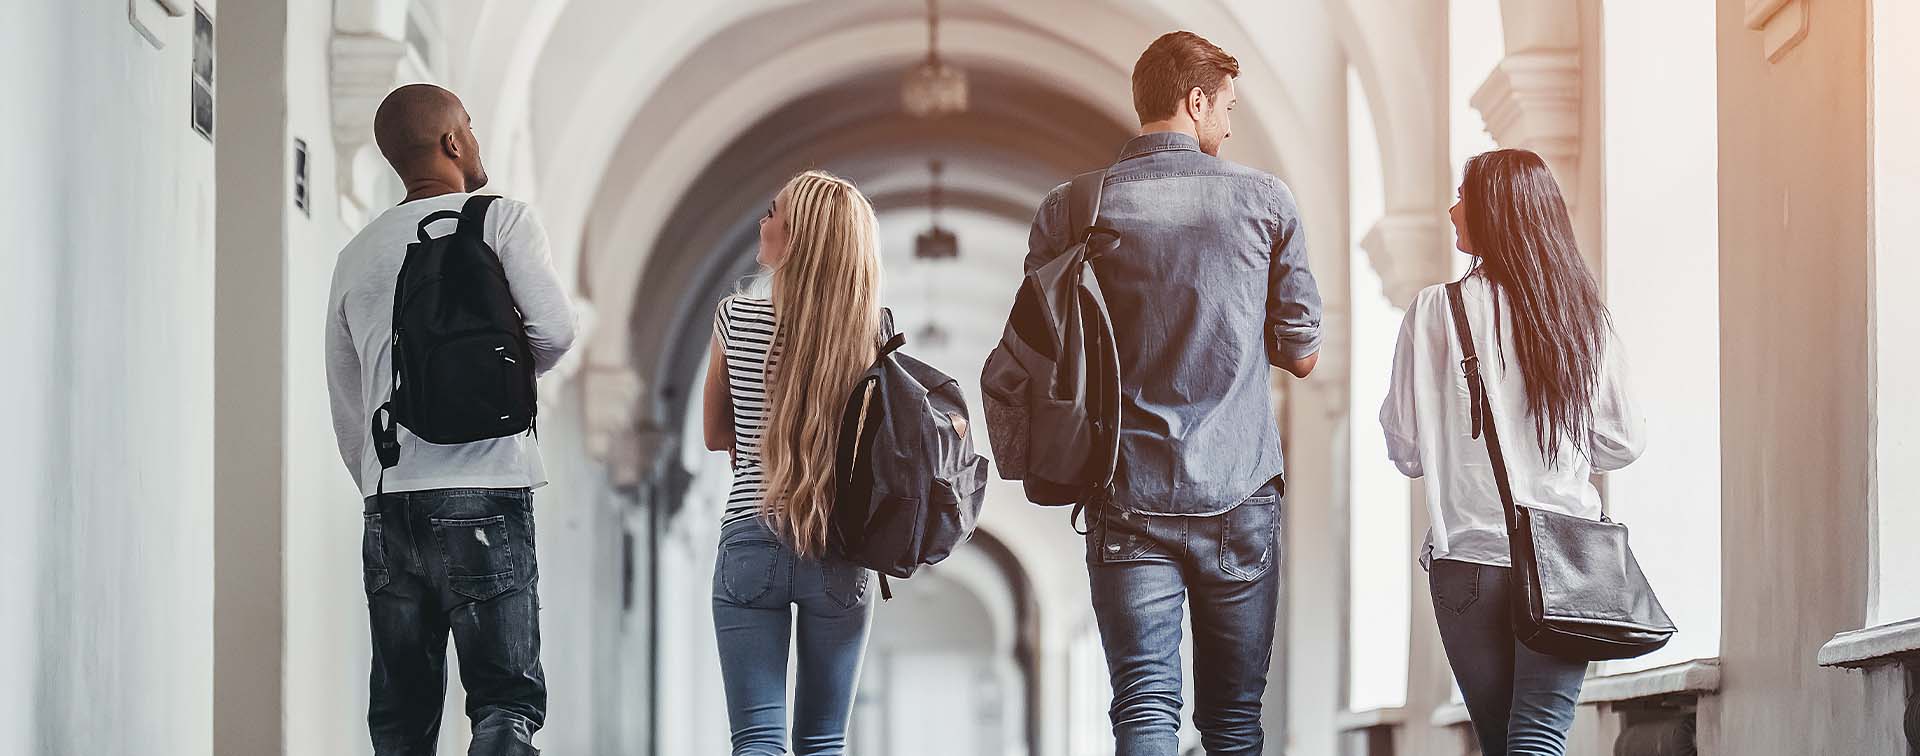 University students carrying backpacks walking in a corridor 